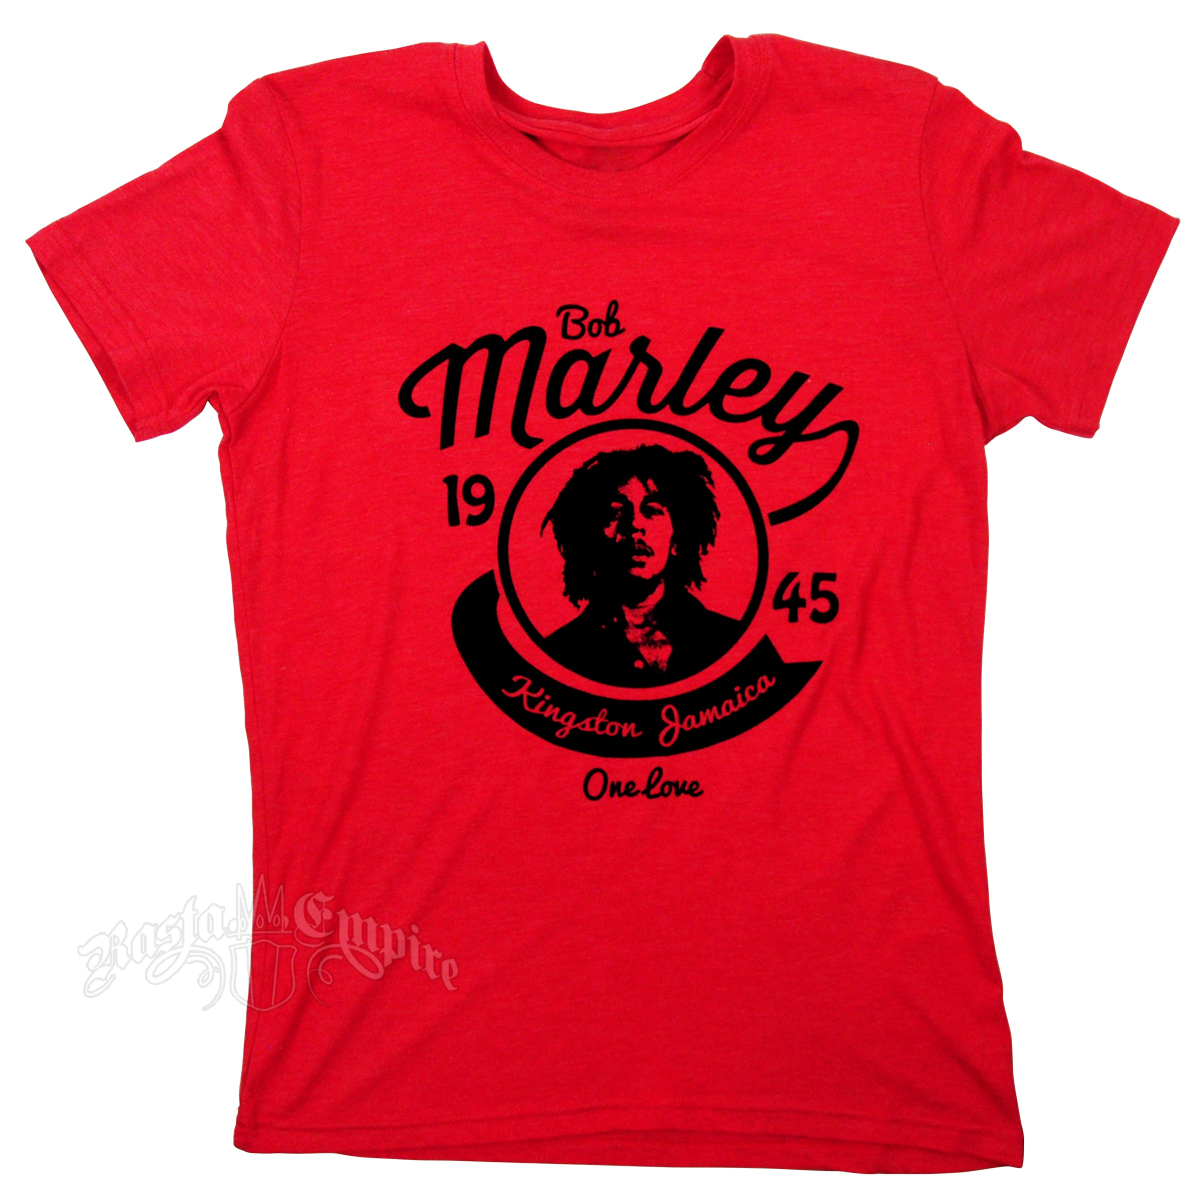 Daughter tissue seaweed Bob Marley 1945 One Love Heather Red T-Shirt - Men's @ RastaEmpire.com